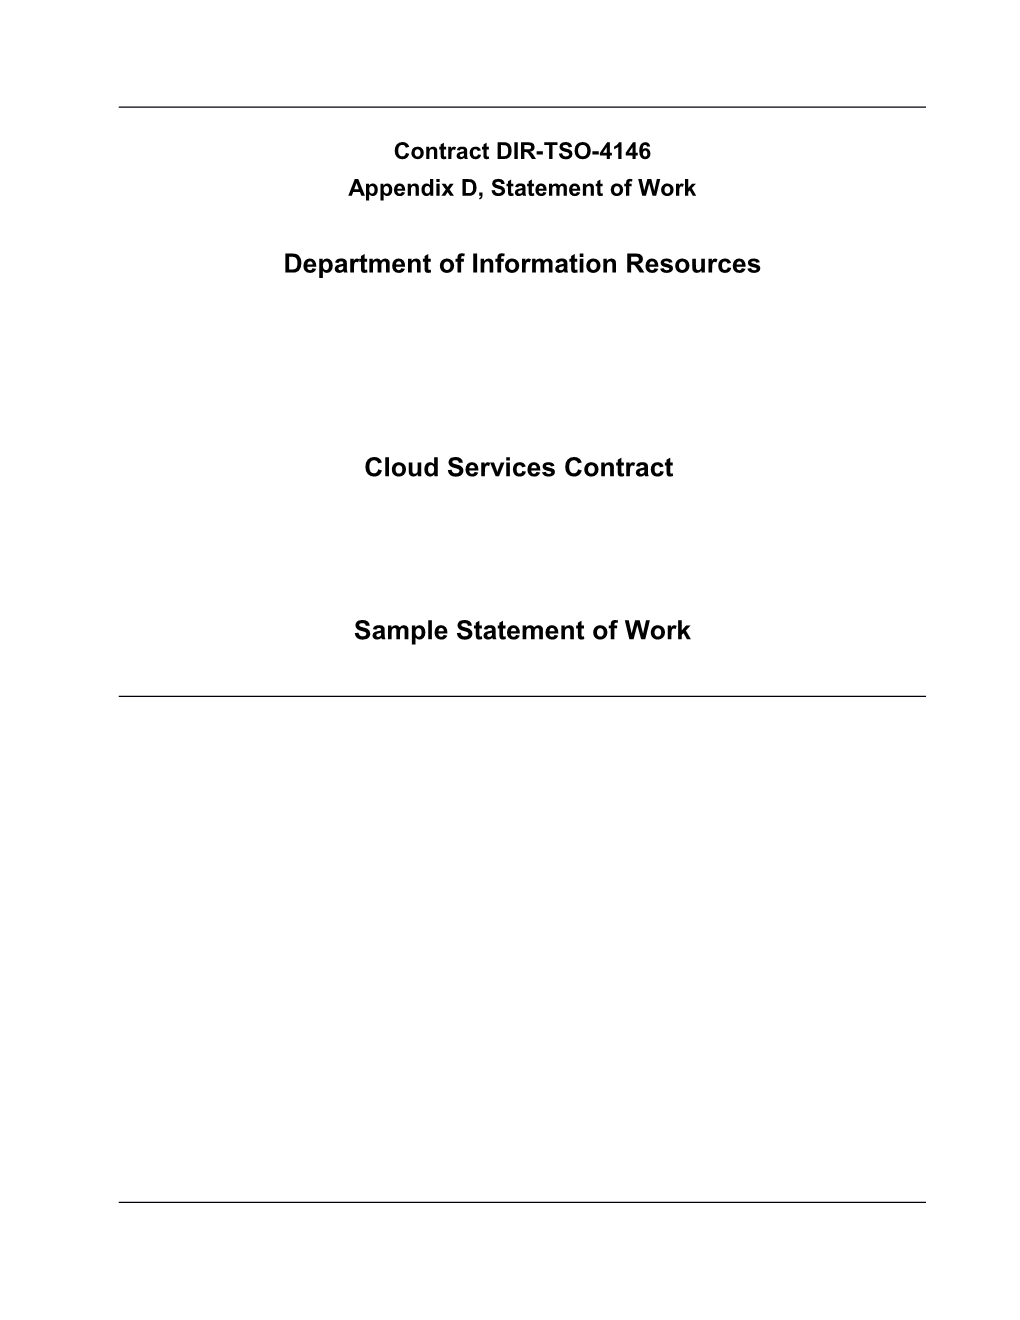 DIR-TSO-4146 Appendix D Sample Statement of Work